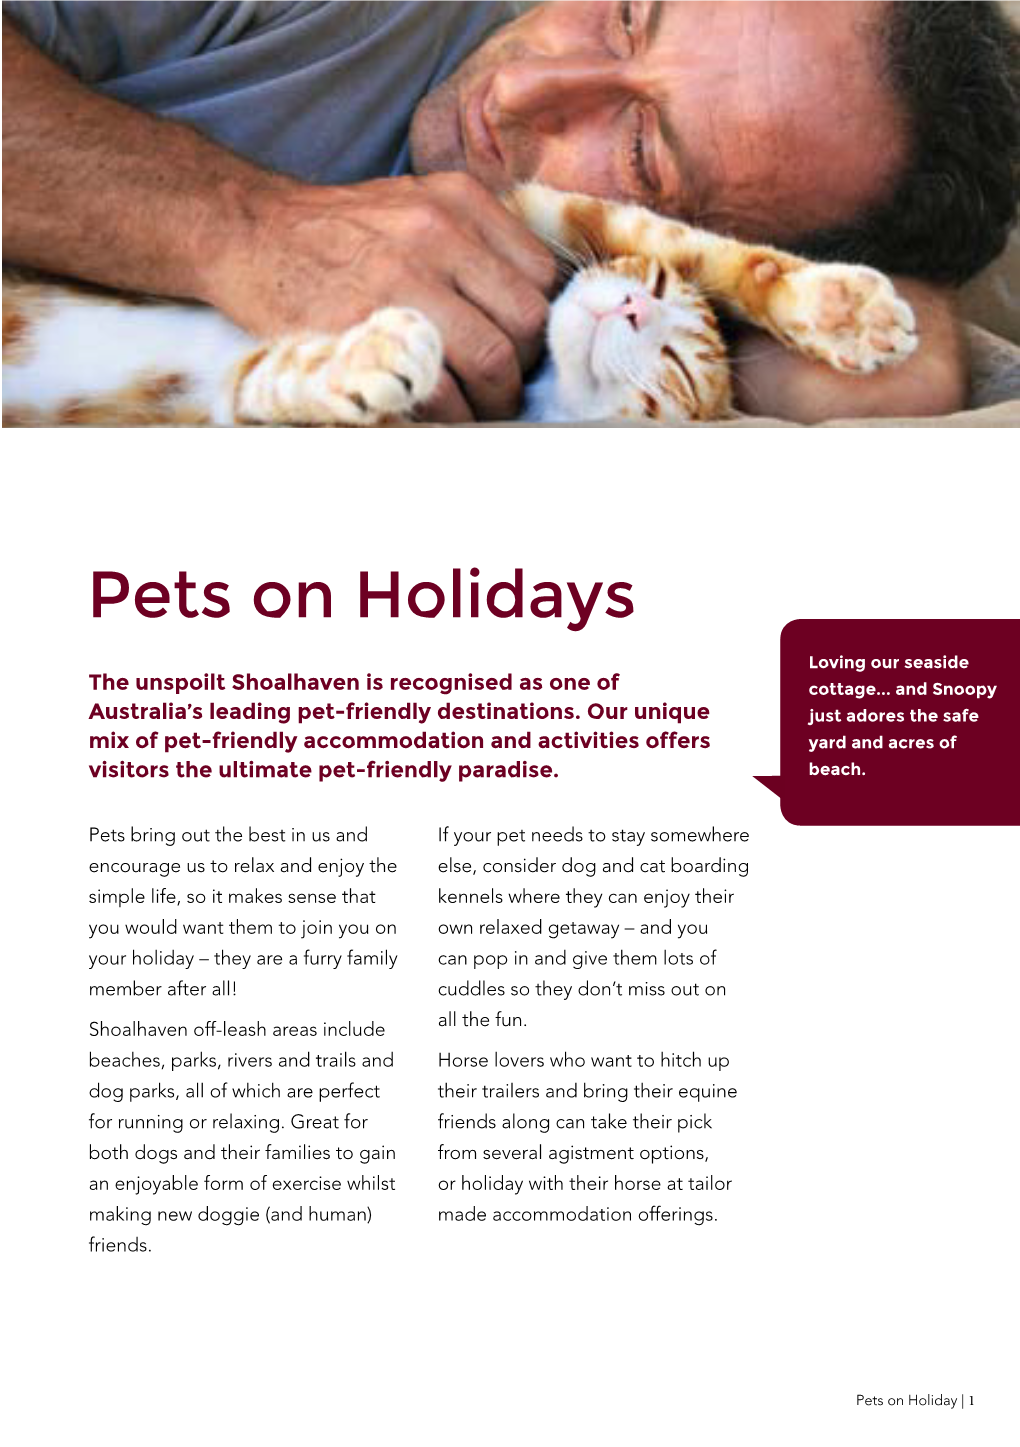 Pets on Holidays